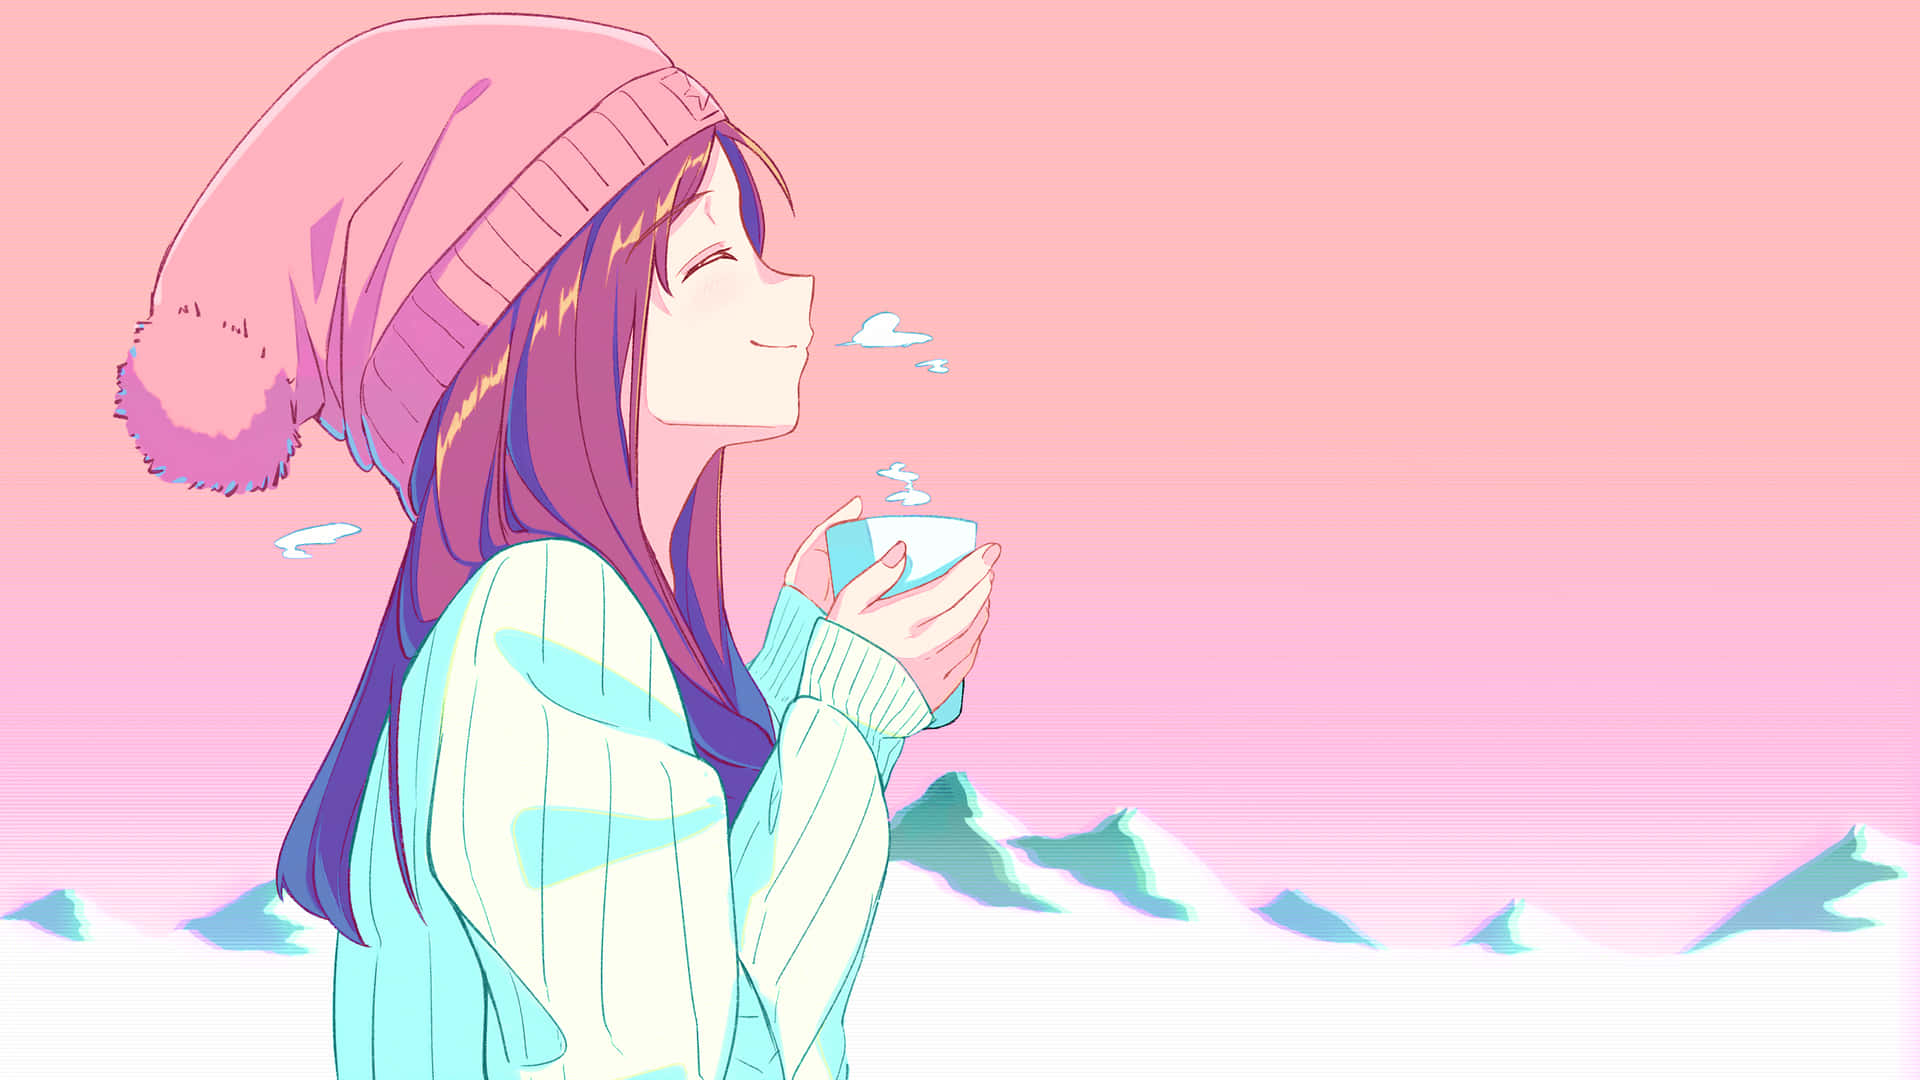 Green tea or coffee : r/Animemes